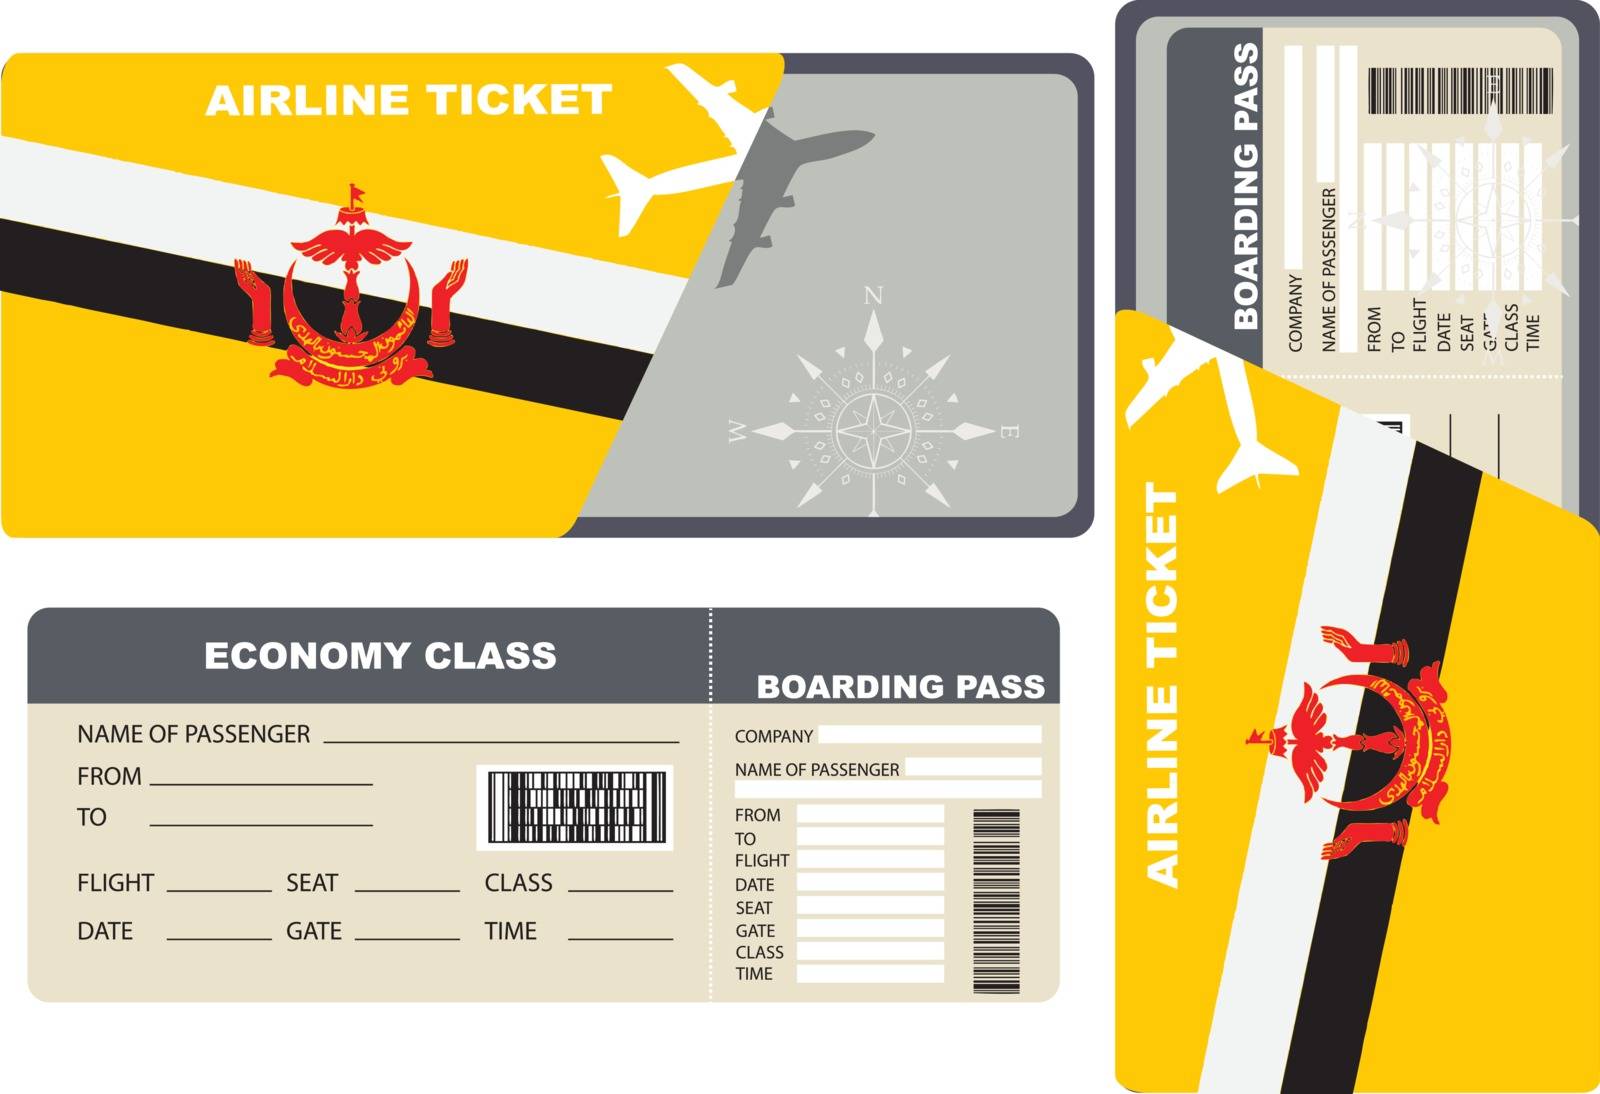 Economy class ticket for a flight to Brunei.